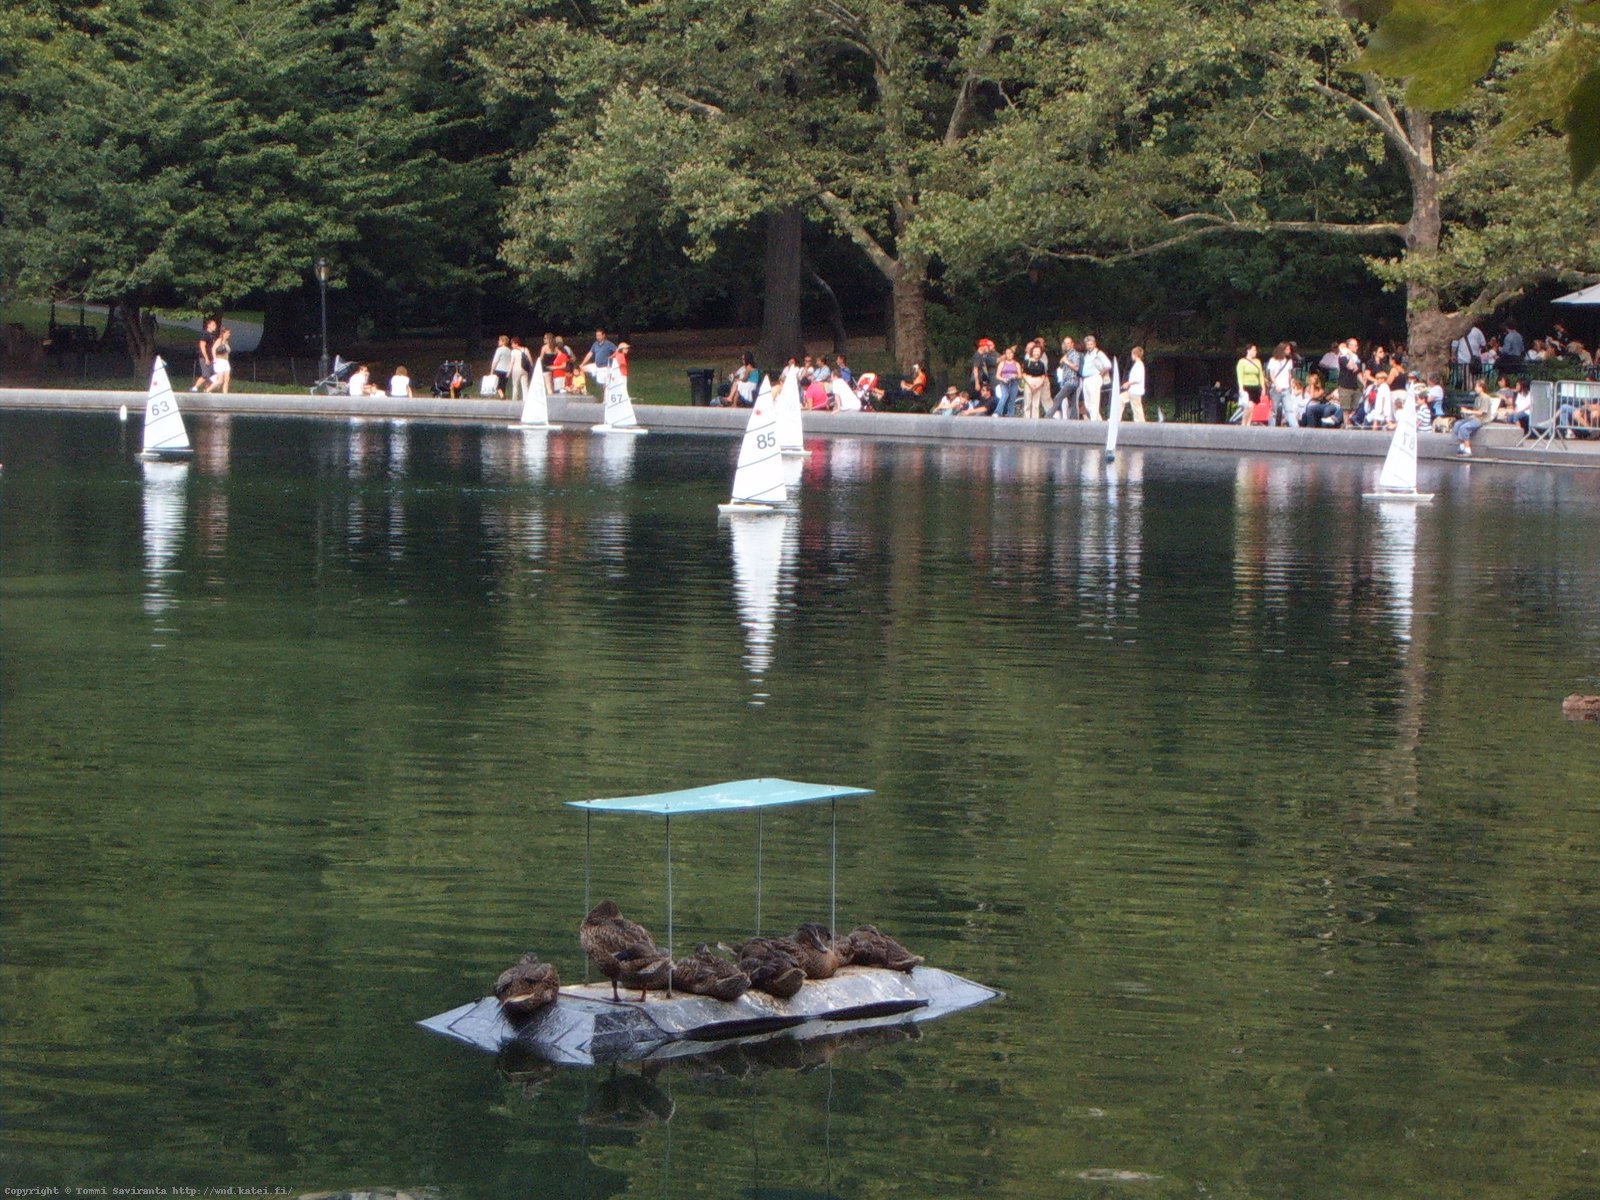 Day #8: Boat Pond in Central Park